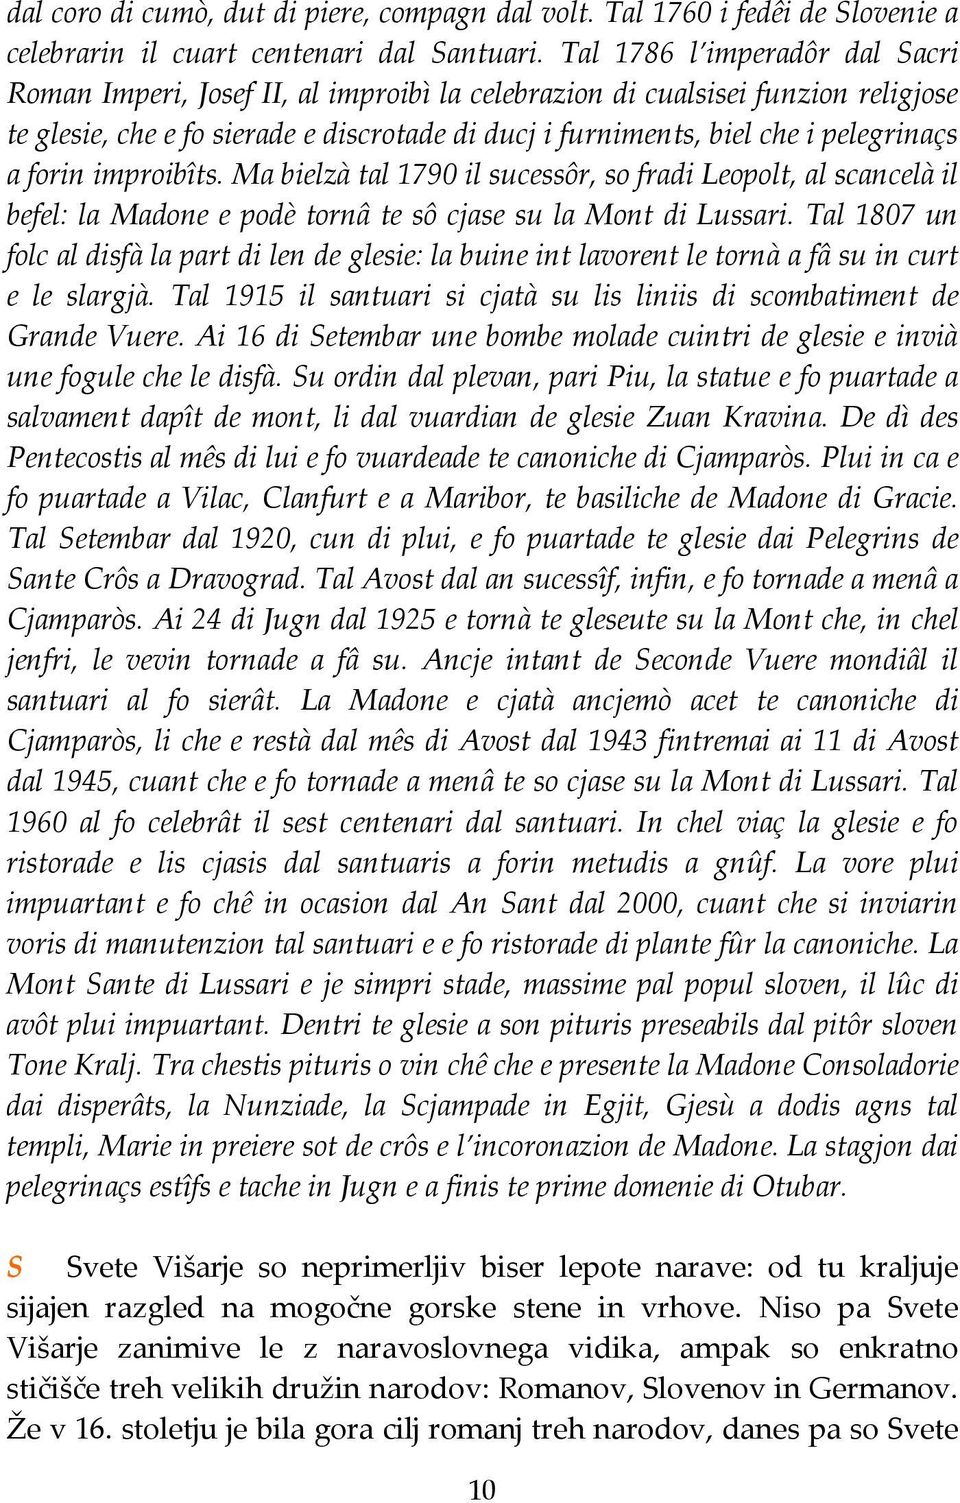 a forin improibîts. Ma bielzà tal 1790 il sucessôr, so fradi Leopolt, al scancelà il befel: la Madone e podè tornâ te sô cjase su la Mont di Lussari.